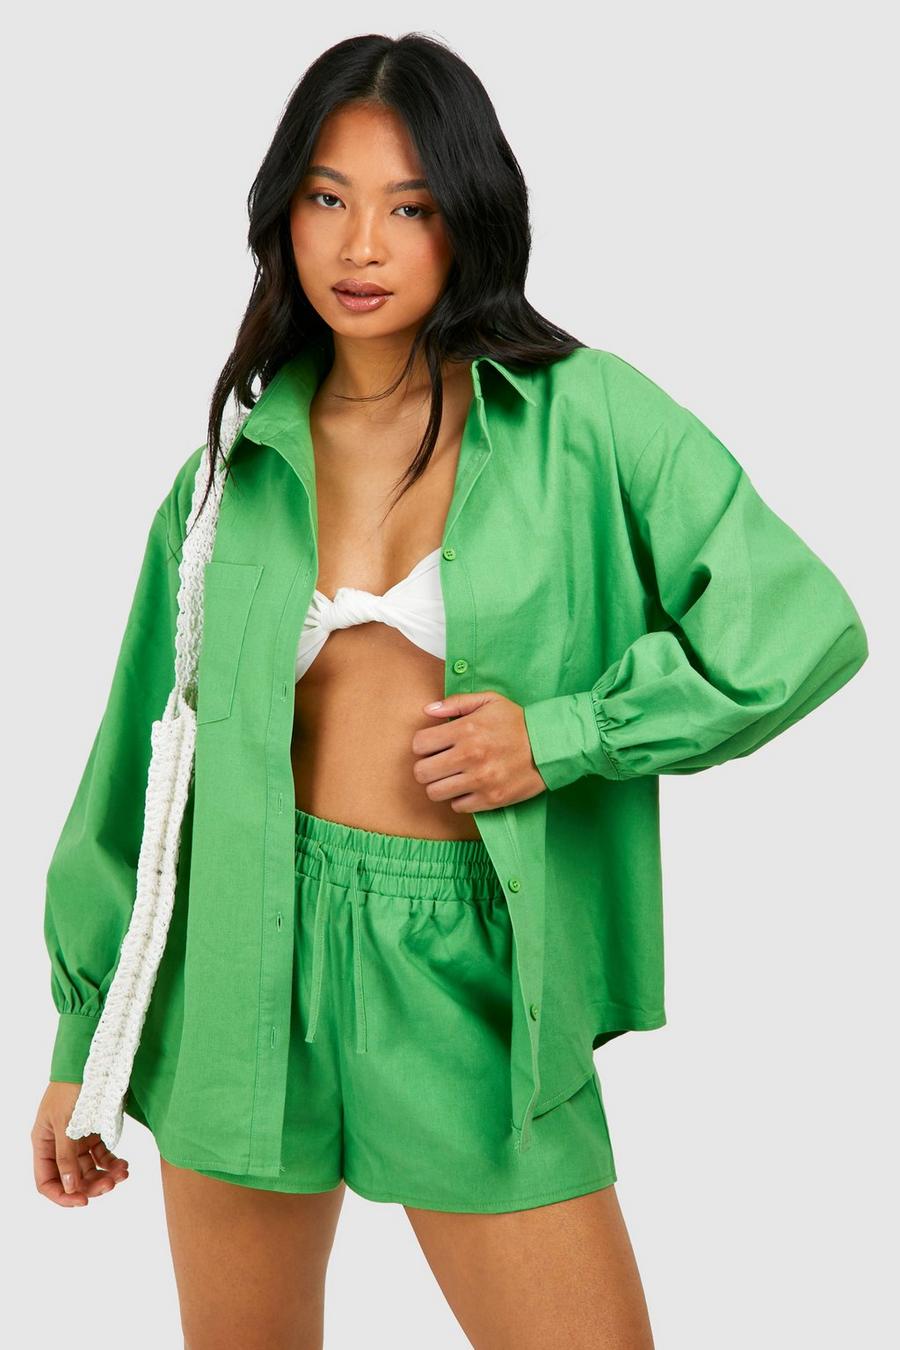 Camisa para la playa de mezcla de lino Premium de Pettie, Bright green